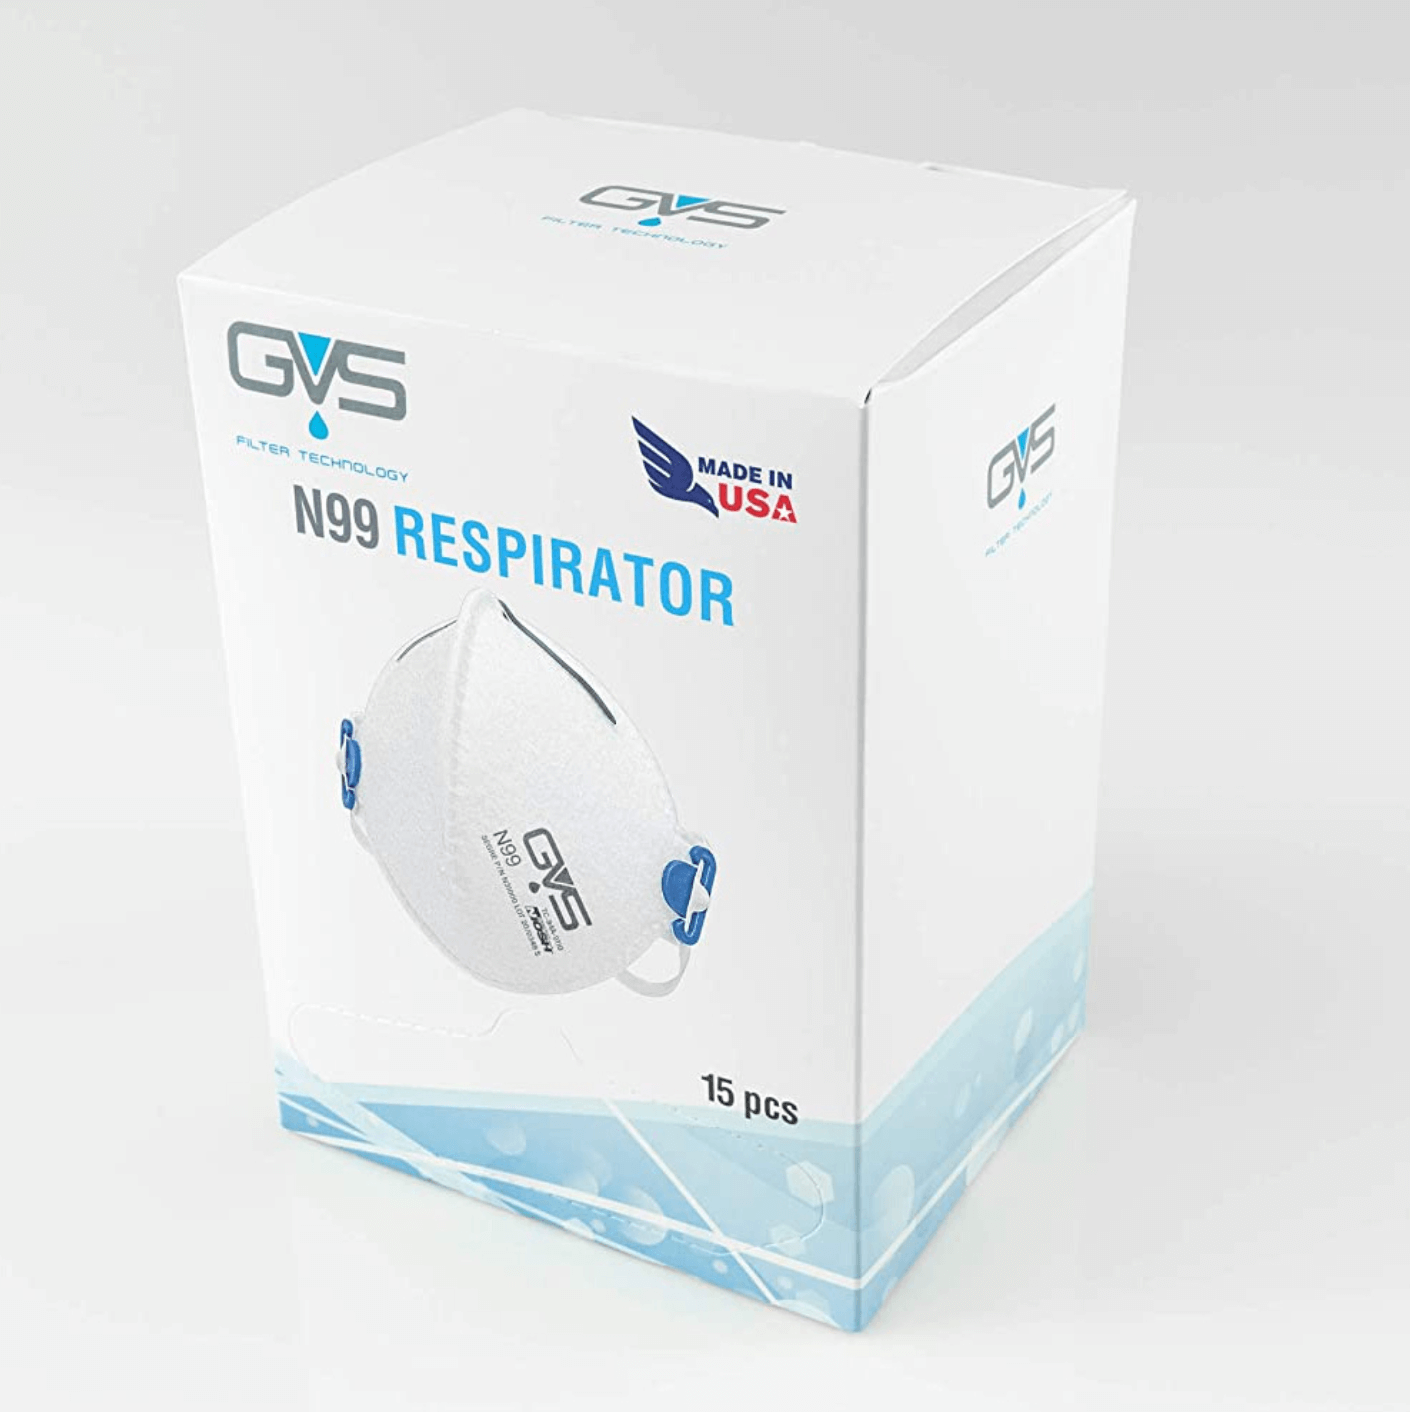 GVS SEGRE N31000 N99 Respirator Box